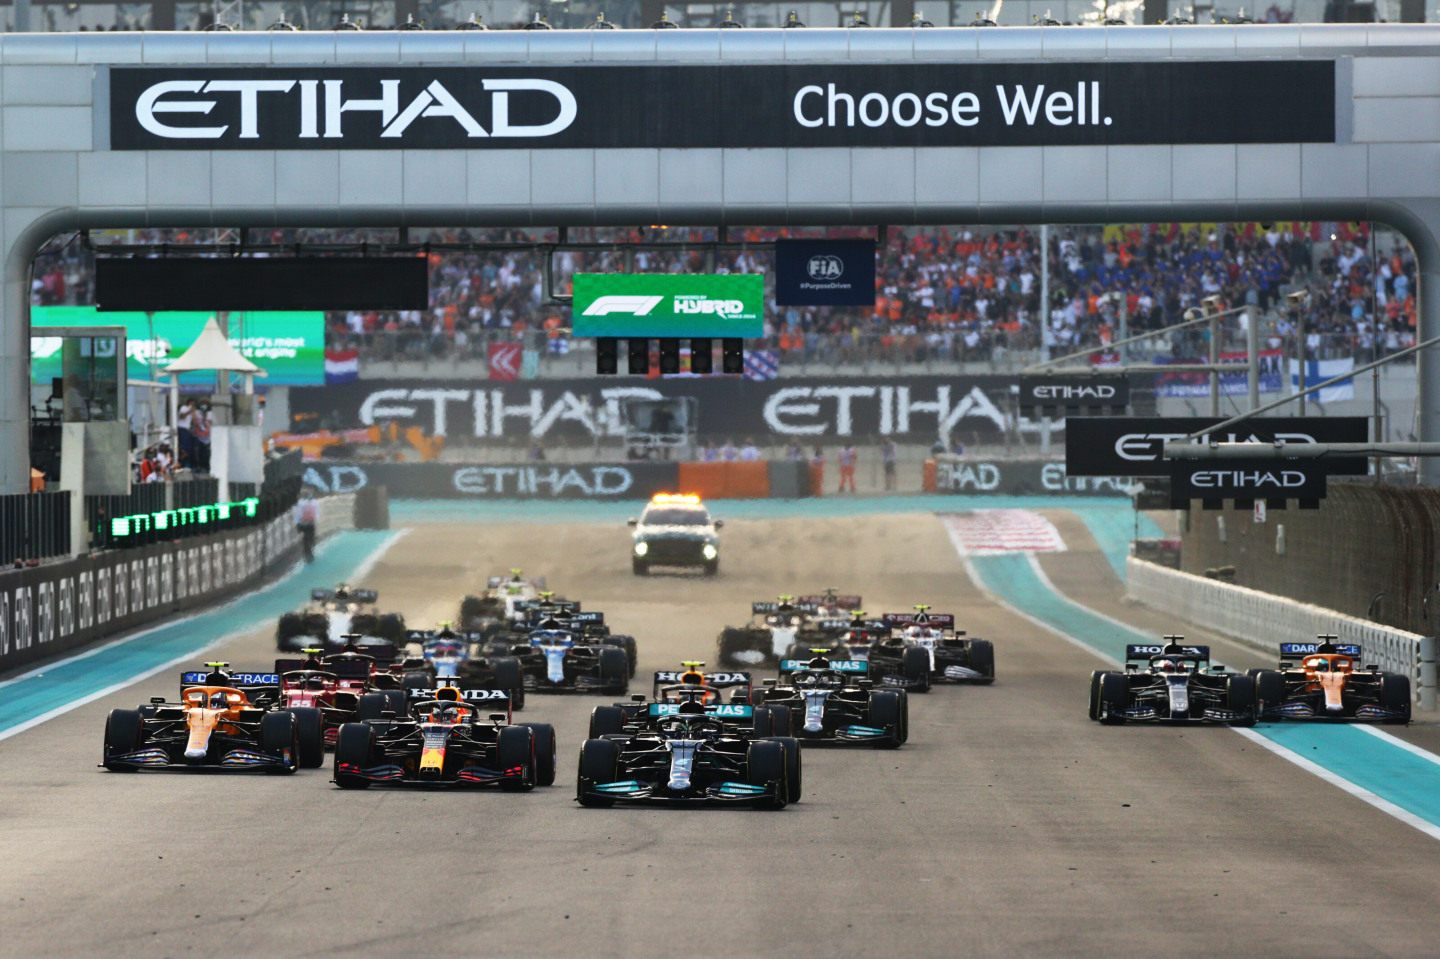 Результат гонки в Абу-Даби предопределило судейское решение © Red Bull Content Pool